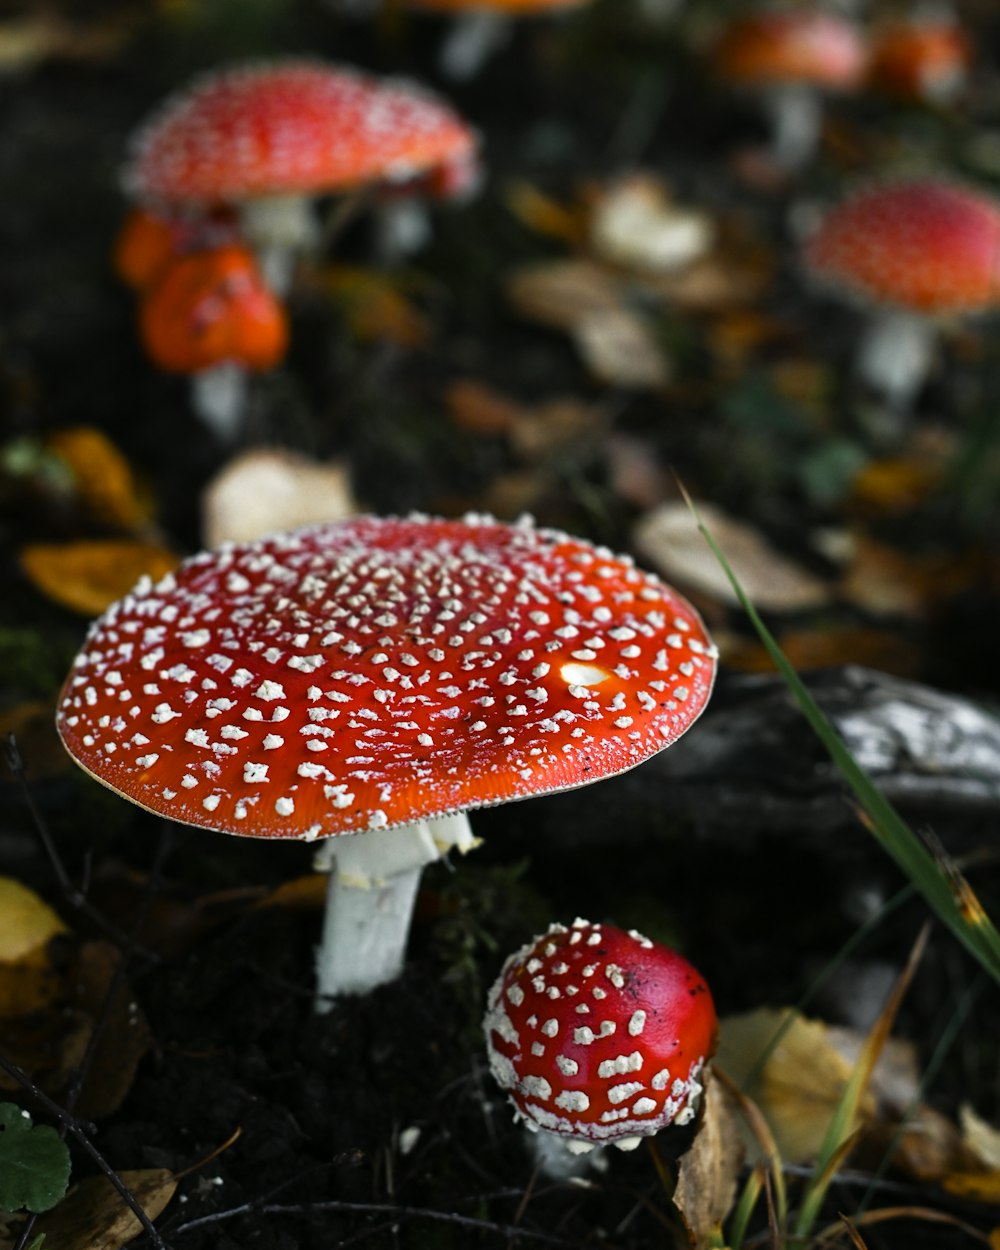 a close up of a red mushroom